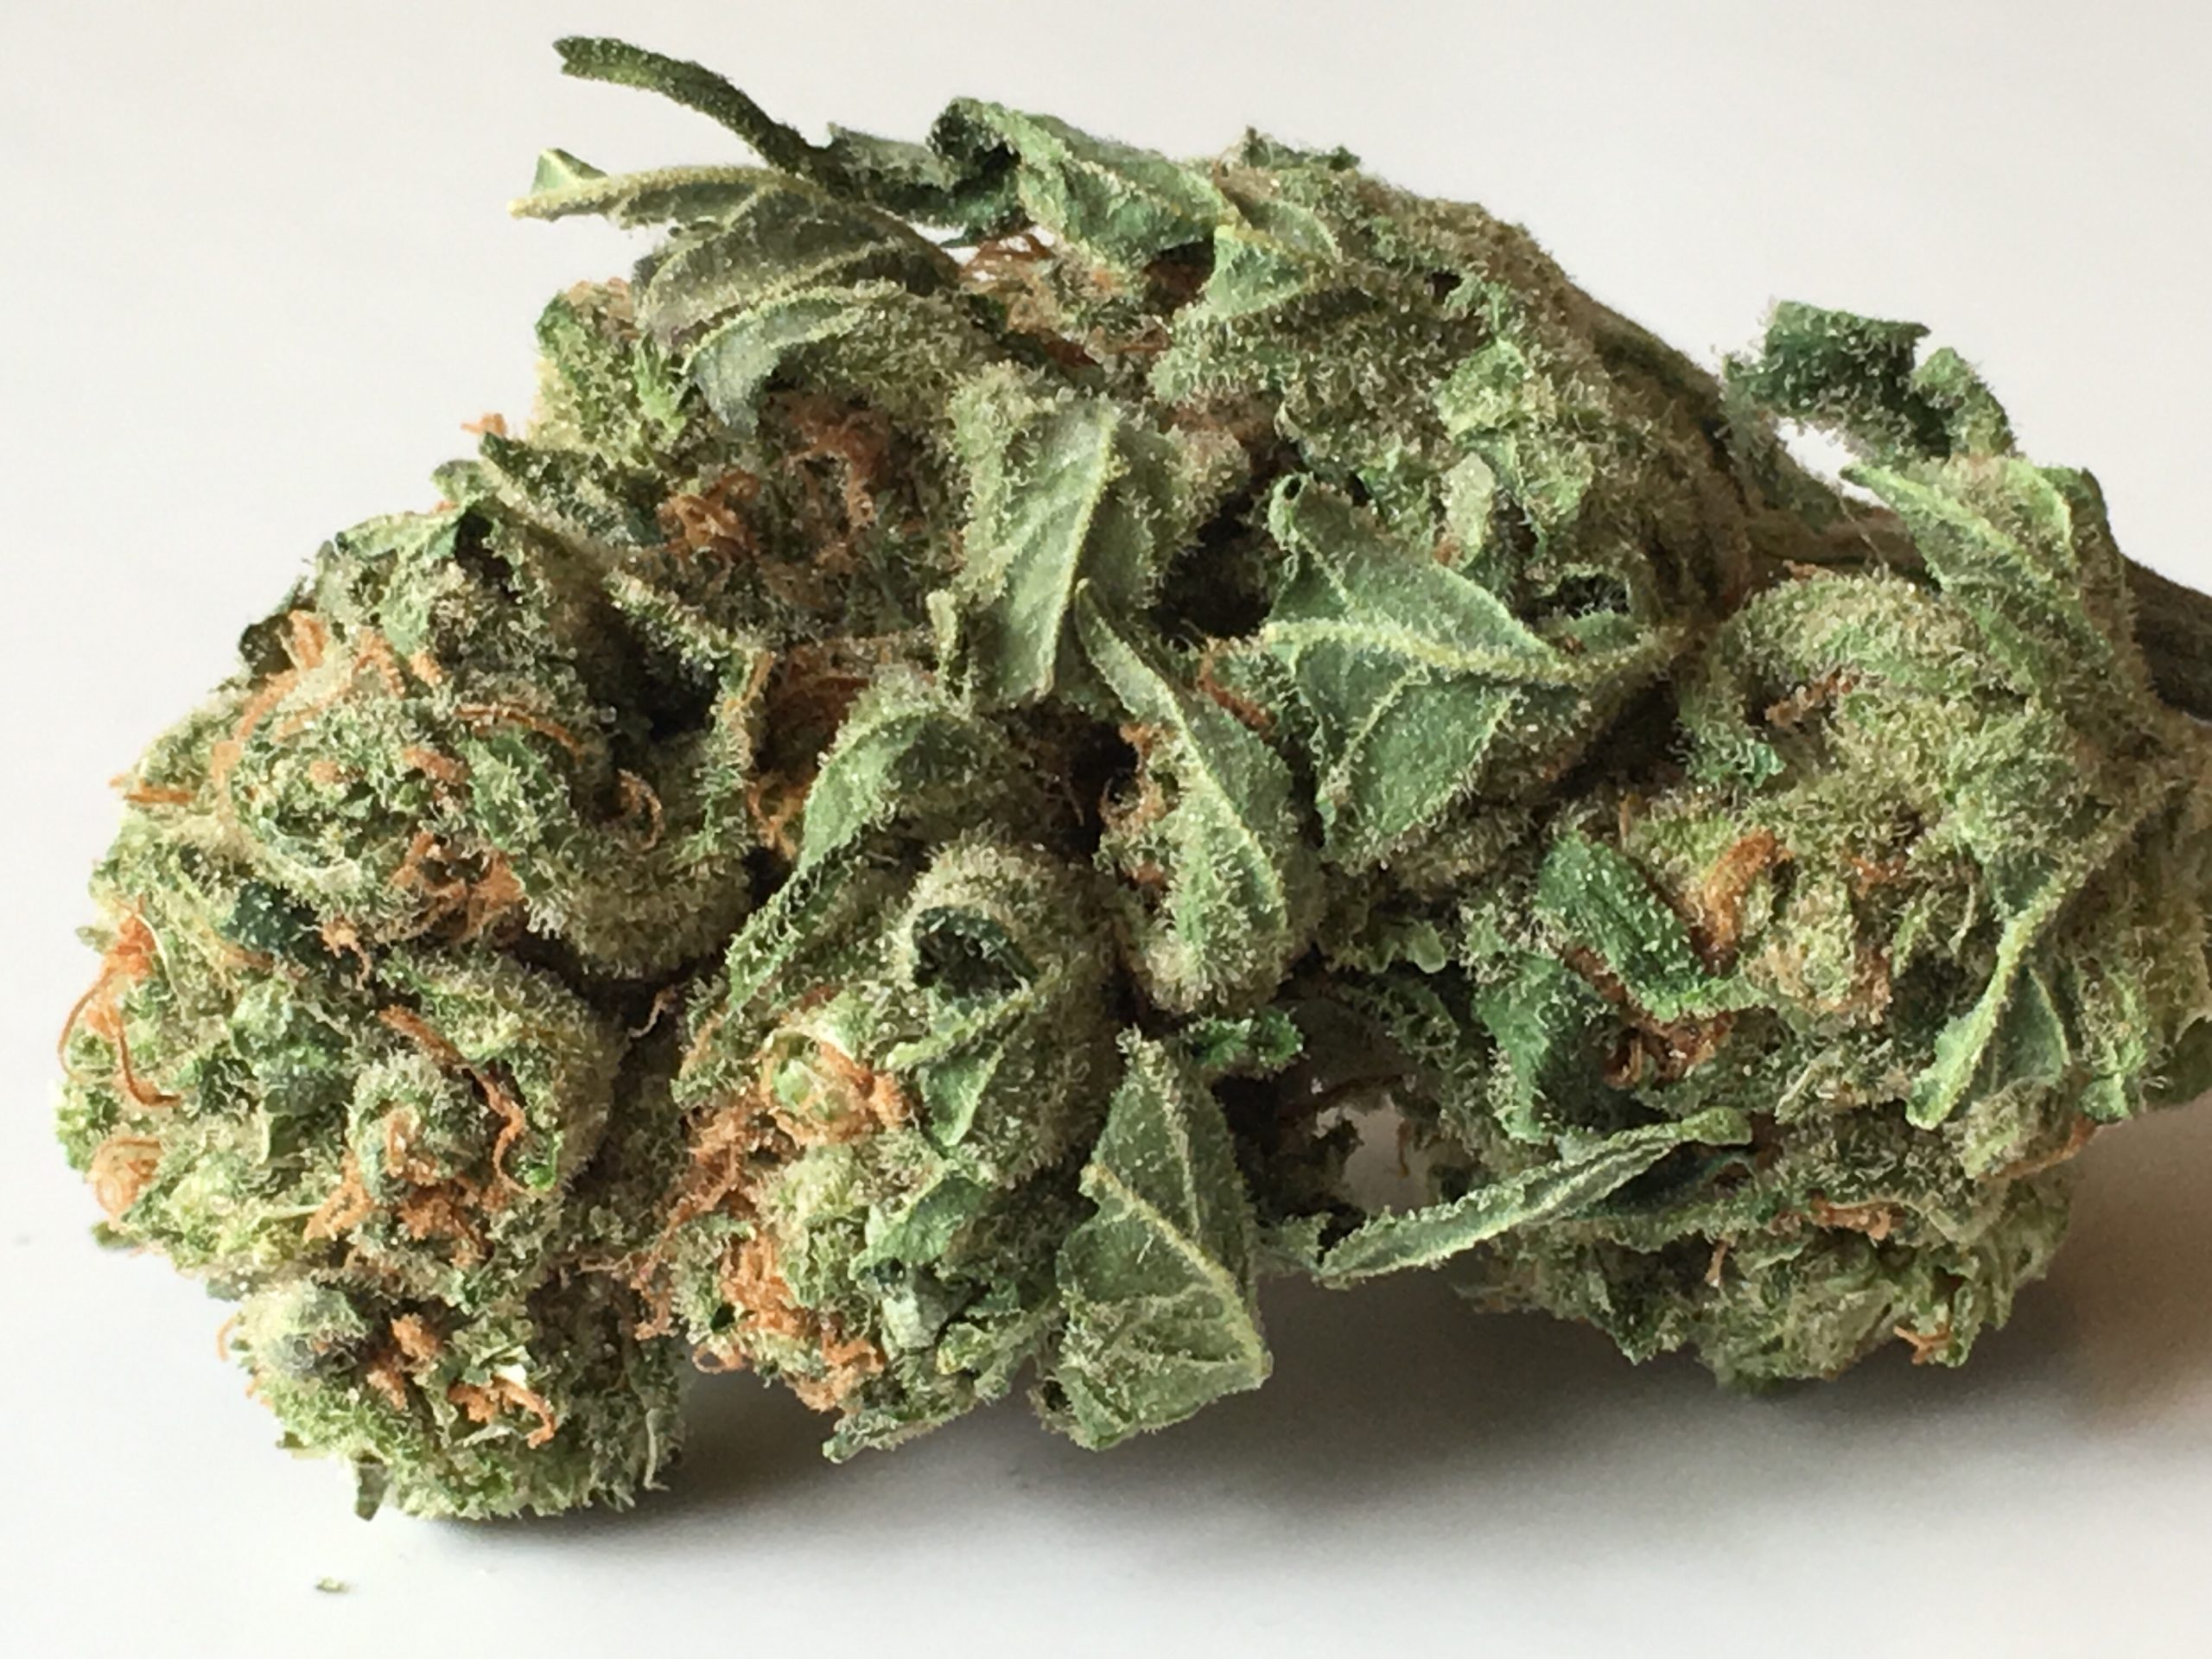 Durban Poison cannabis flower